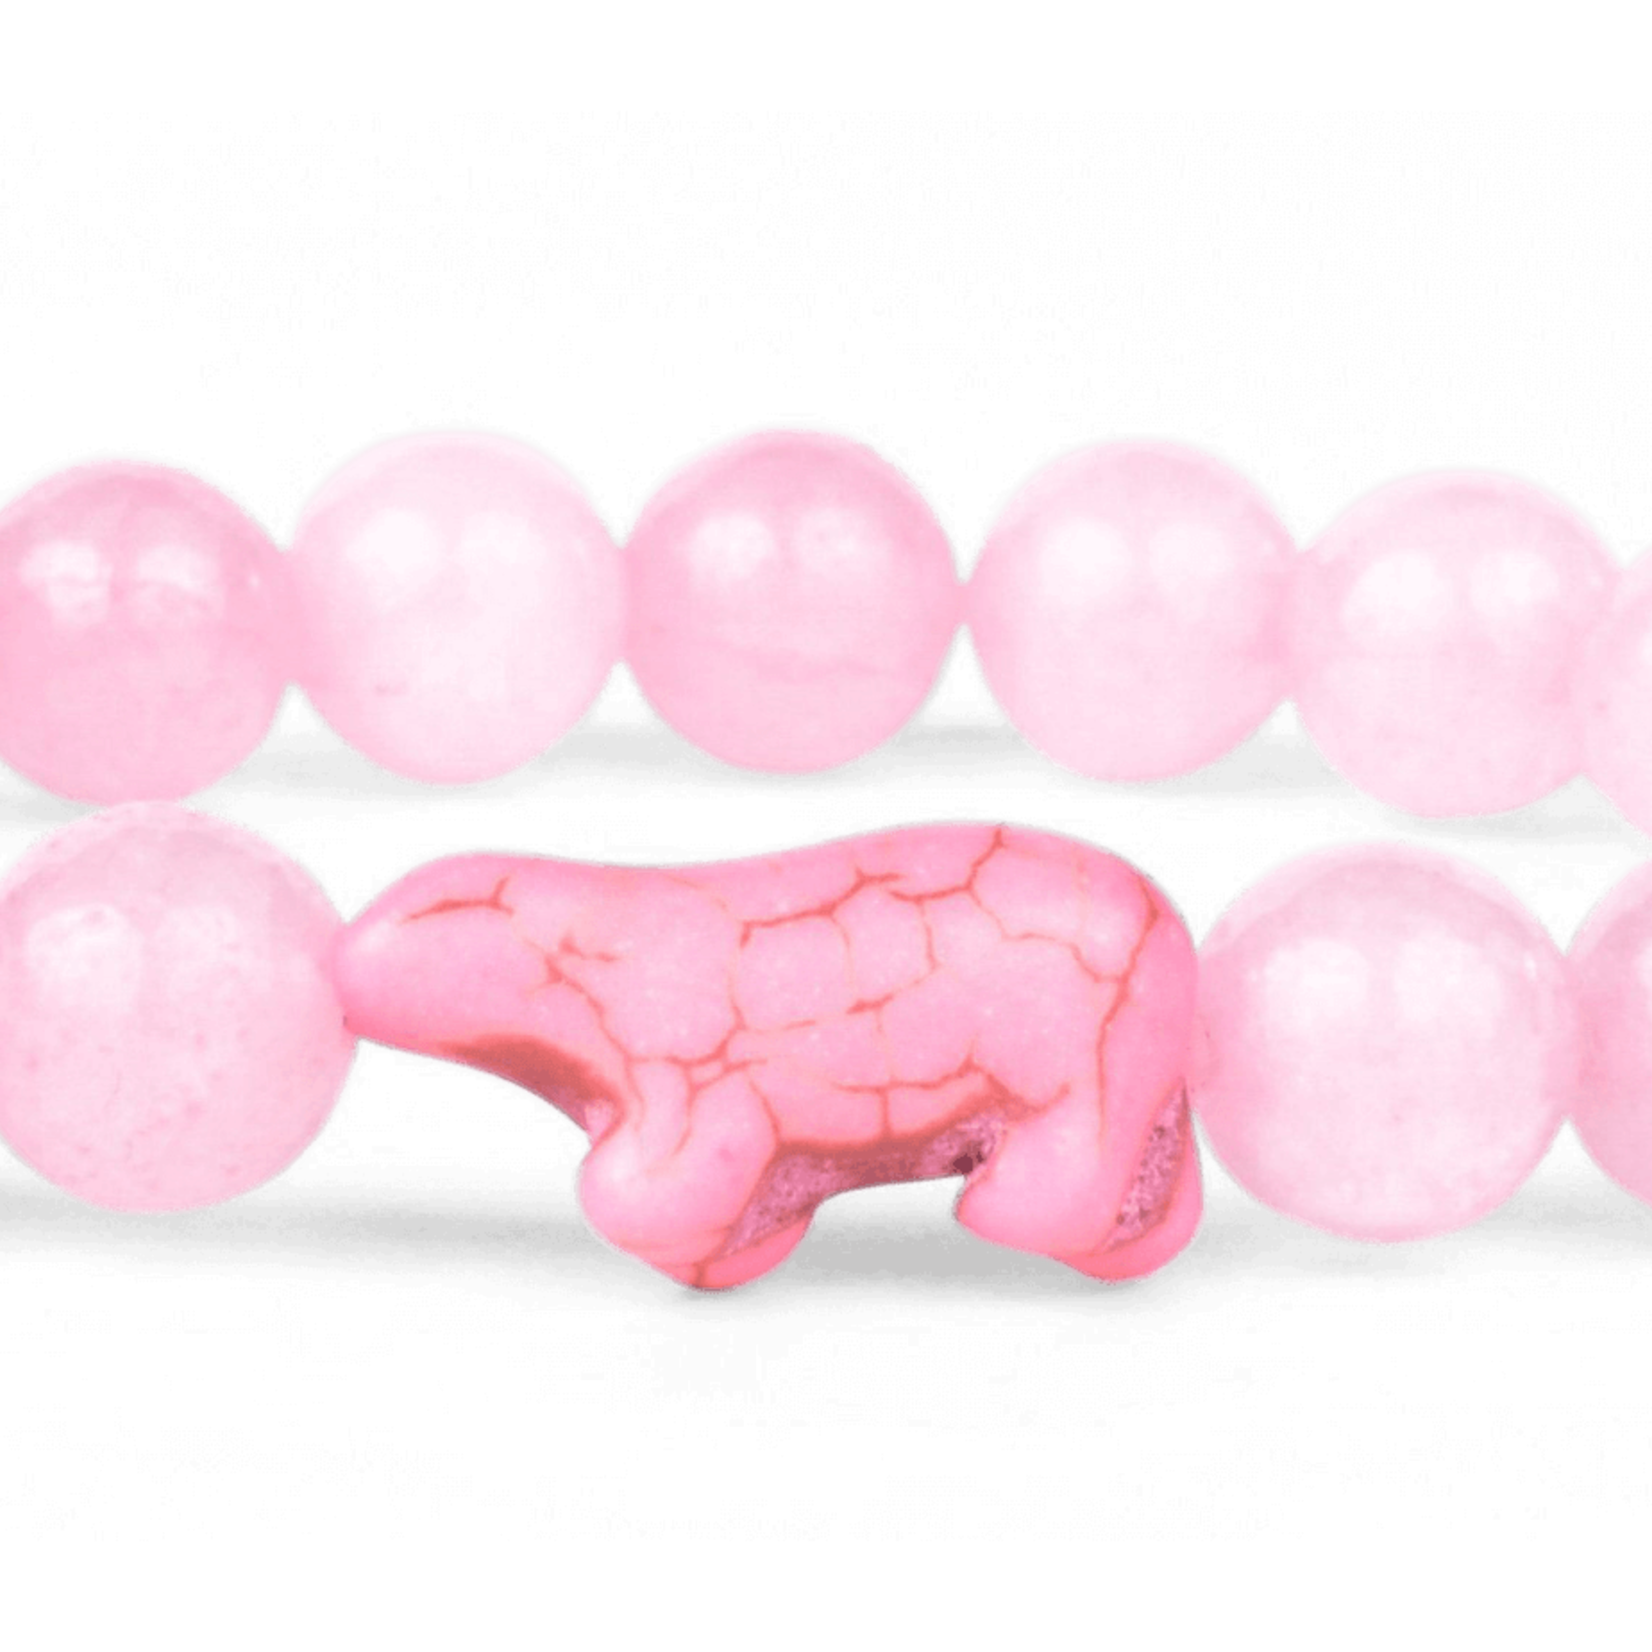 Fahlo Fahlo - The Venture Bracelet (Polar Bear) - Northern Light Pink